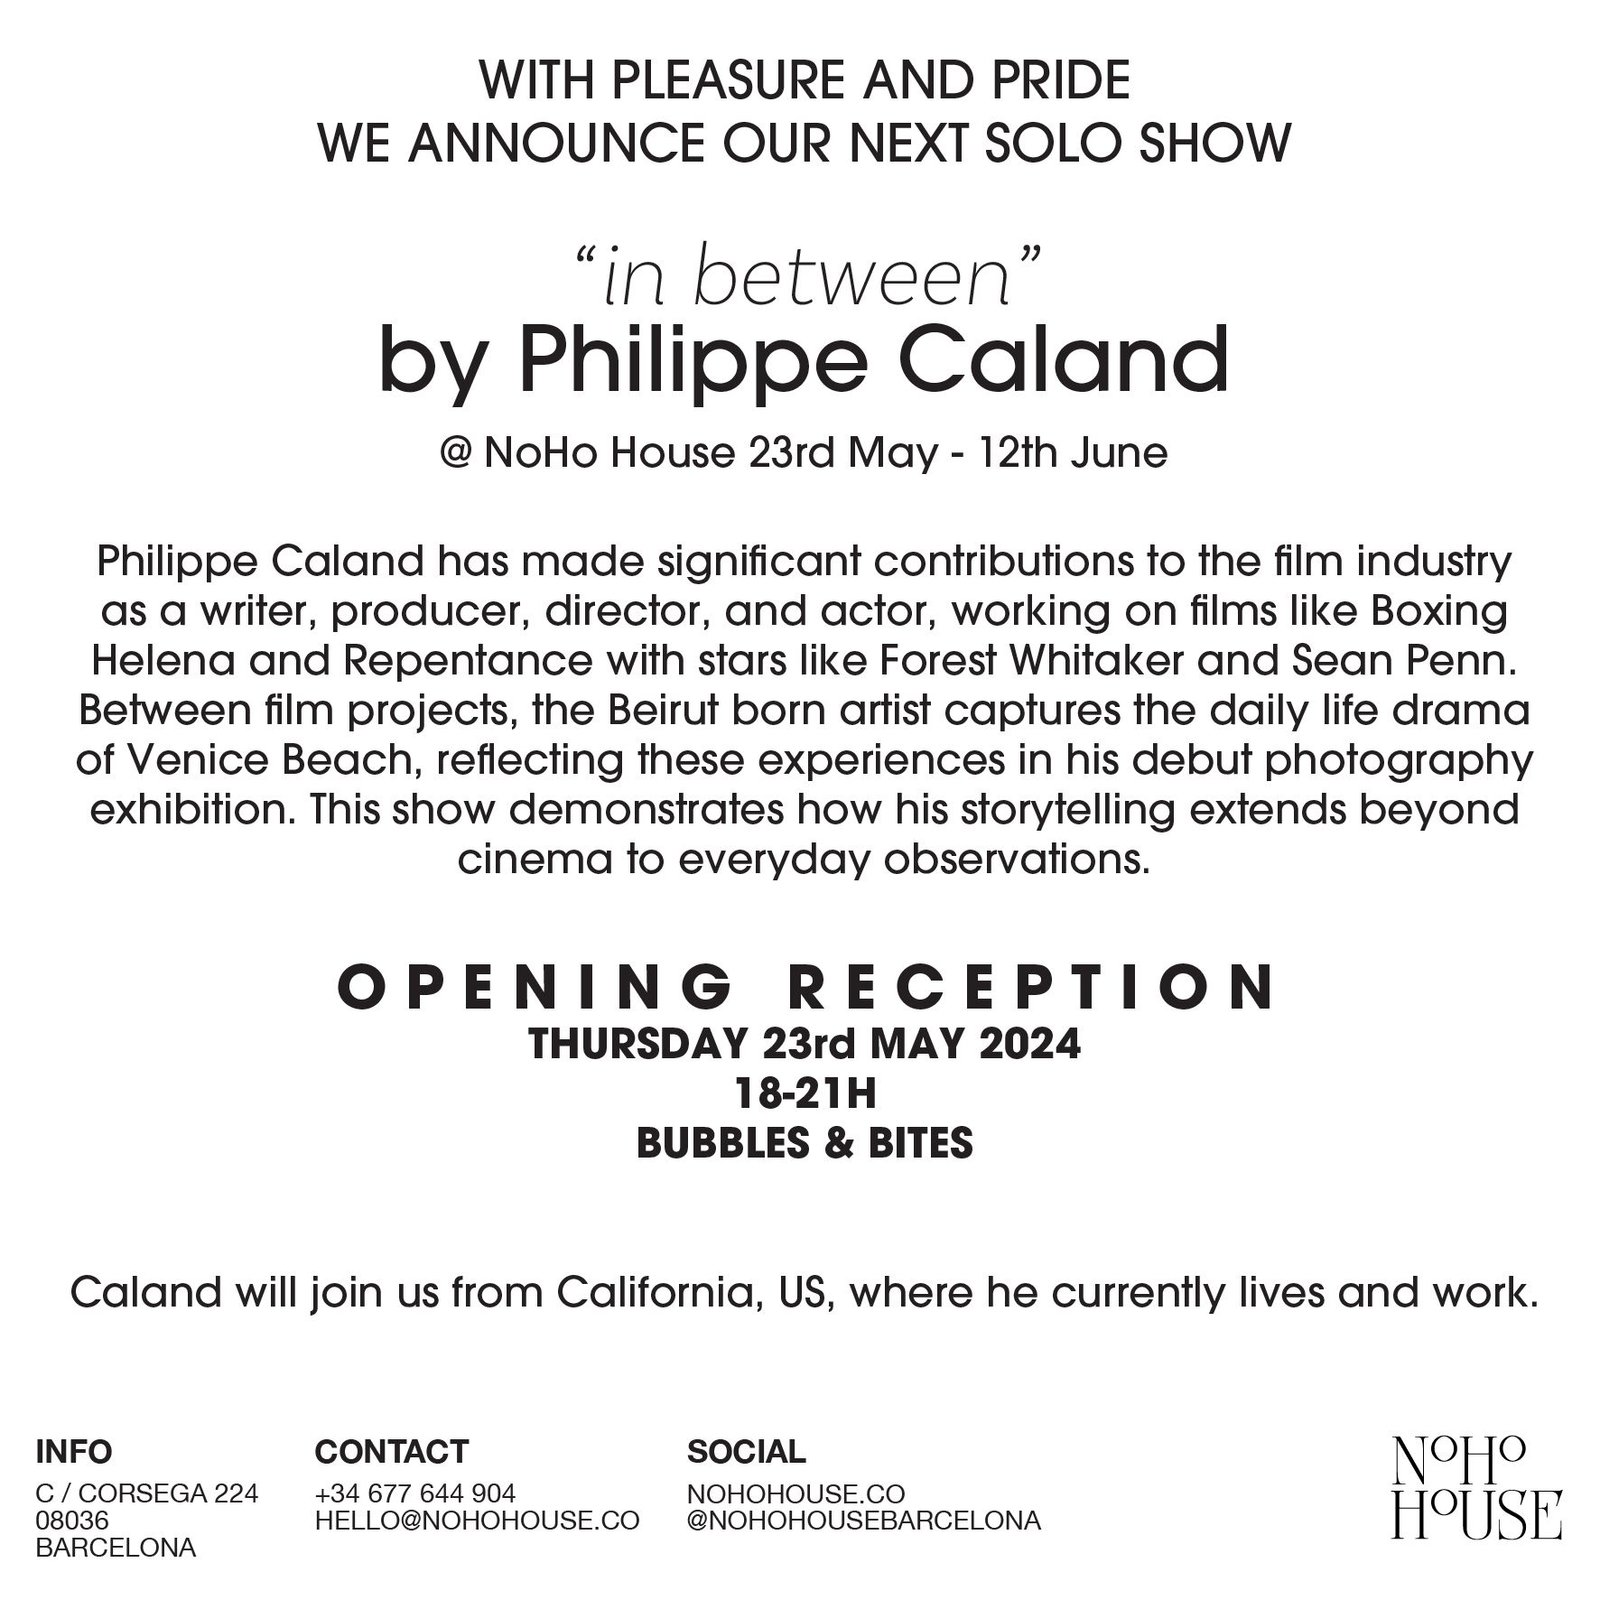 Philippe Caland exhibition